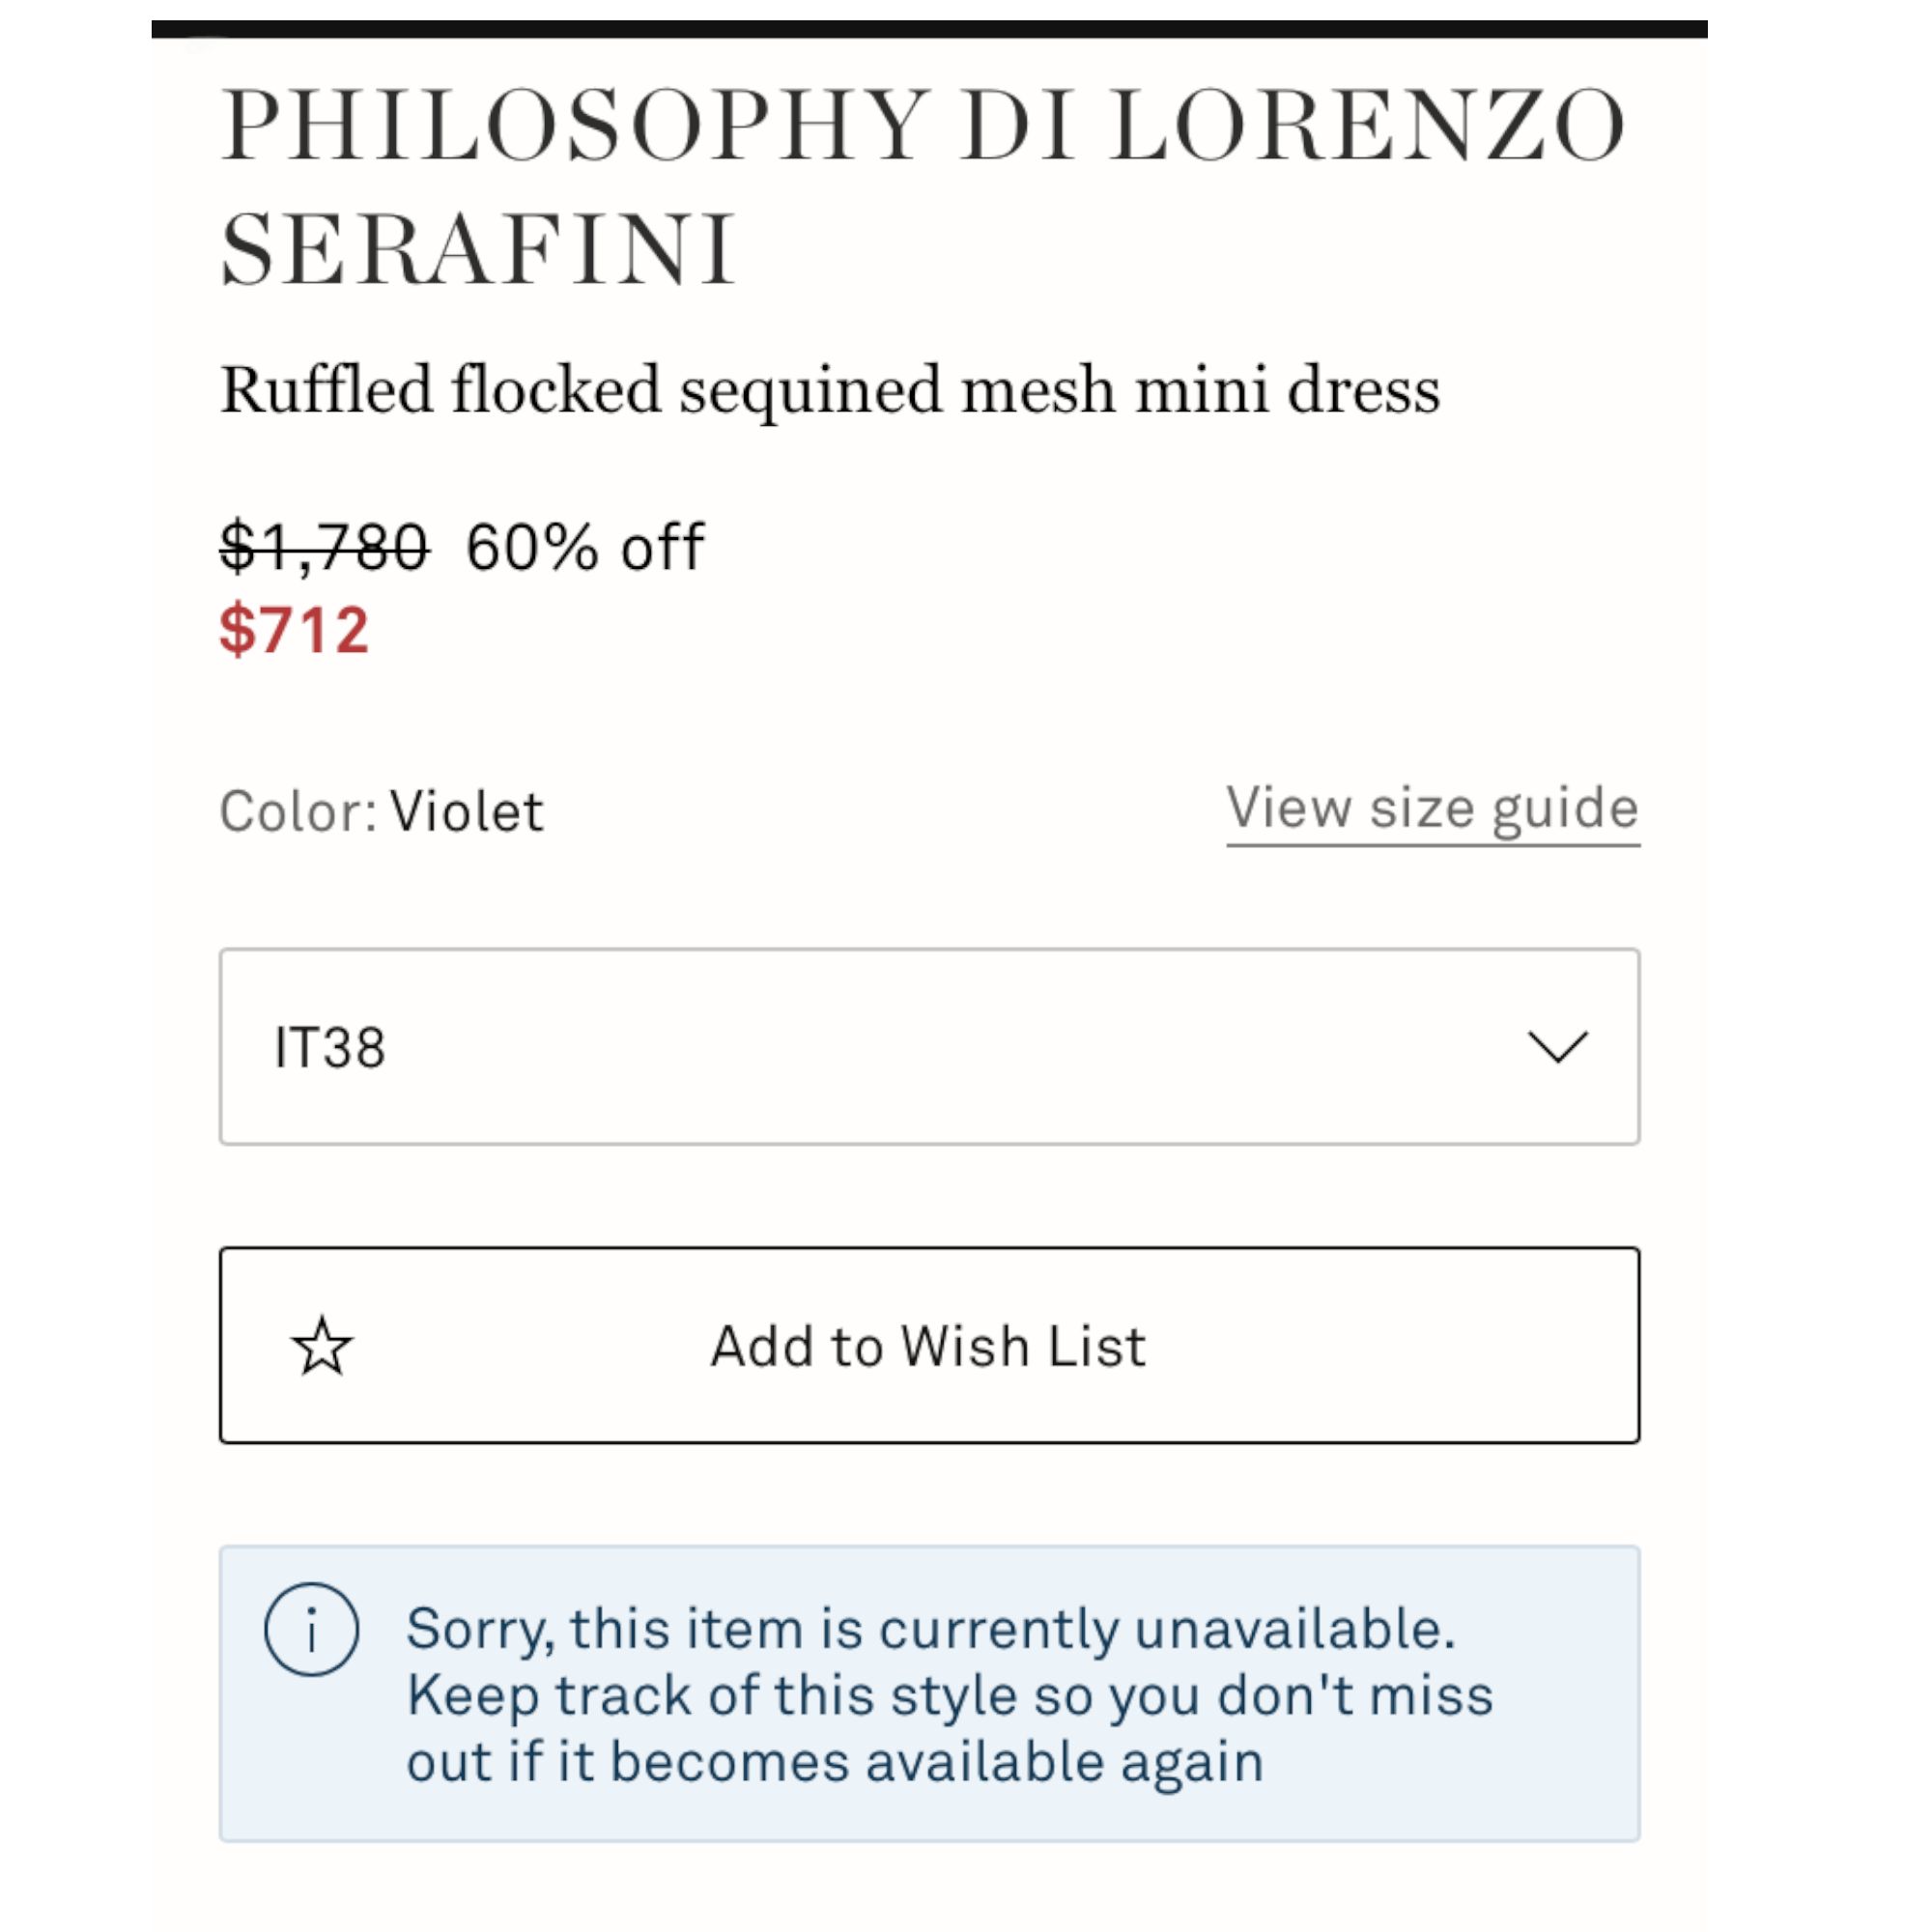 PHILOSOPHY DI LORENZO SERAFINI Ruffled flocked sequined mini dress |Size:38 IT|